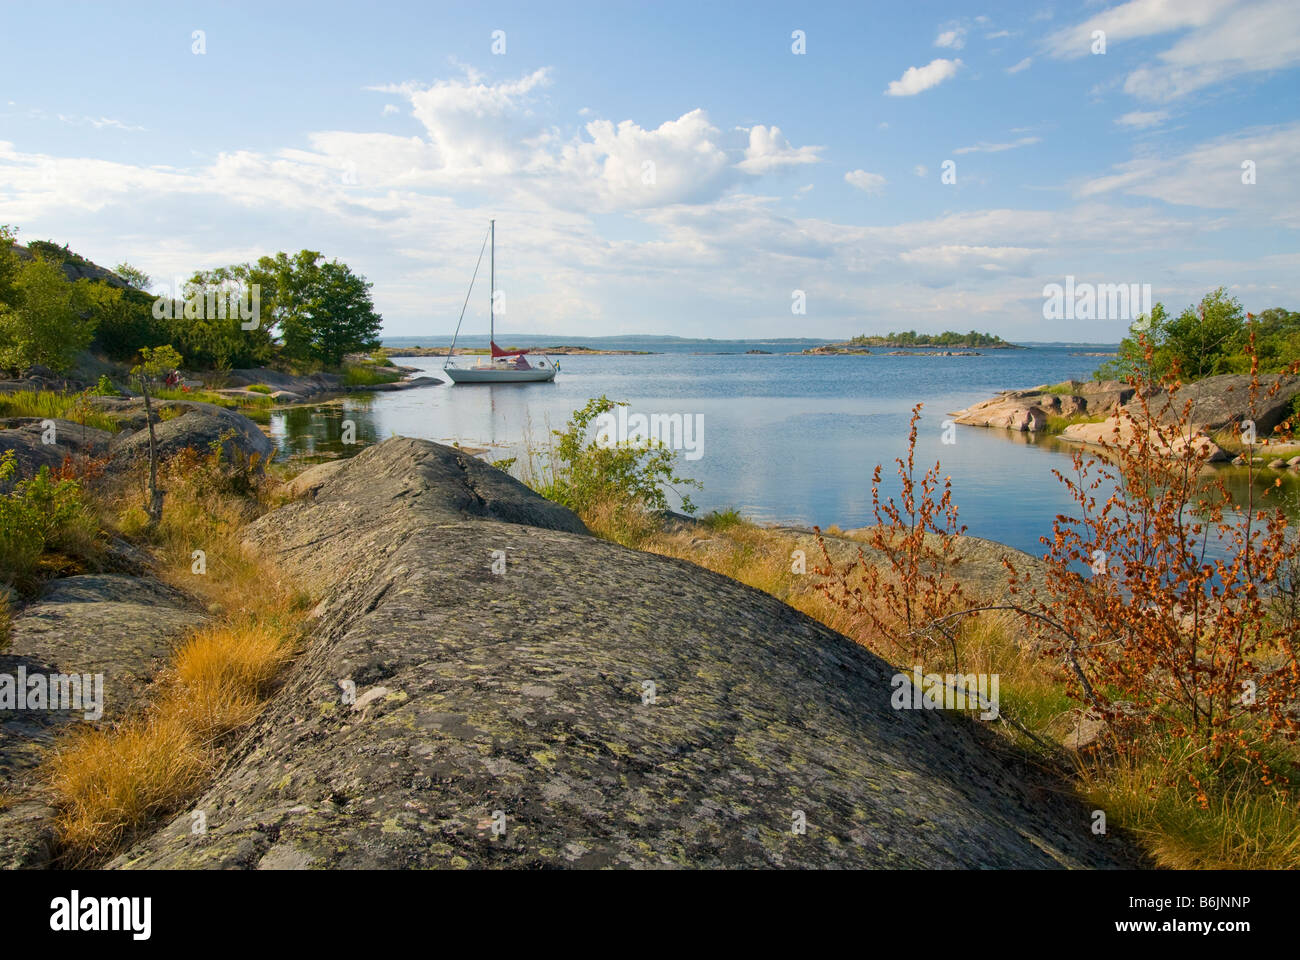 Sailboat in archipelago Stock Photo